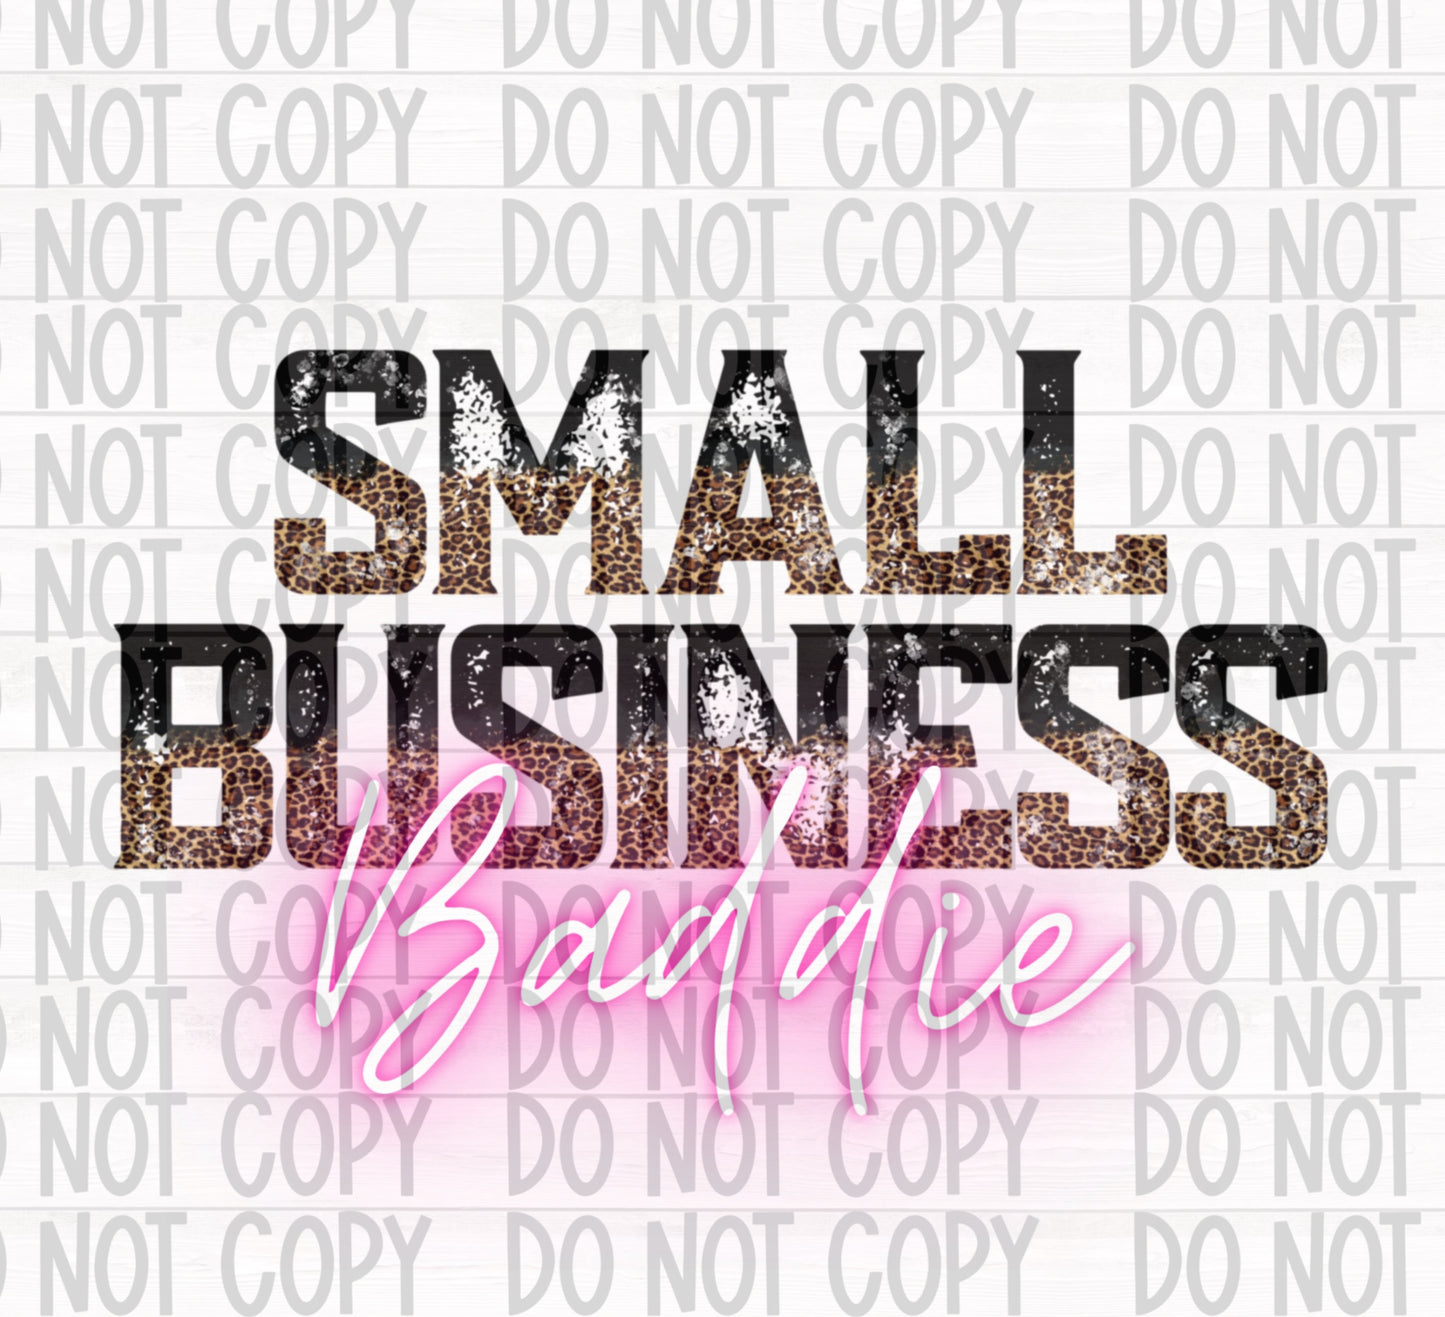 Small business baddie PNG - DIGITAL DOWNLOAD